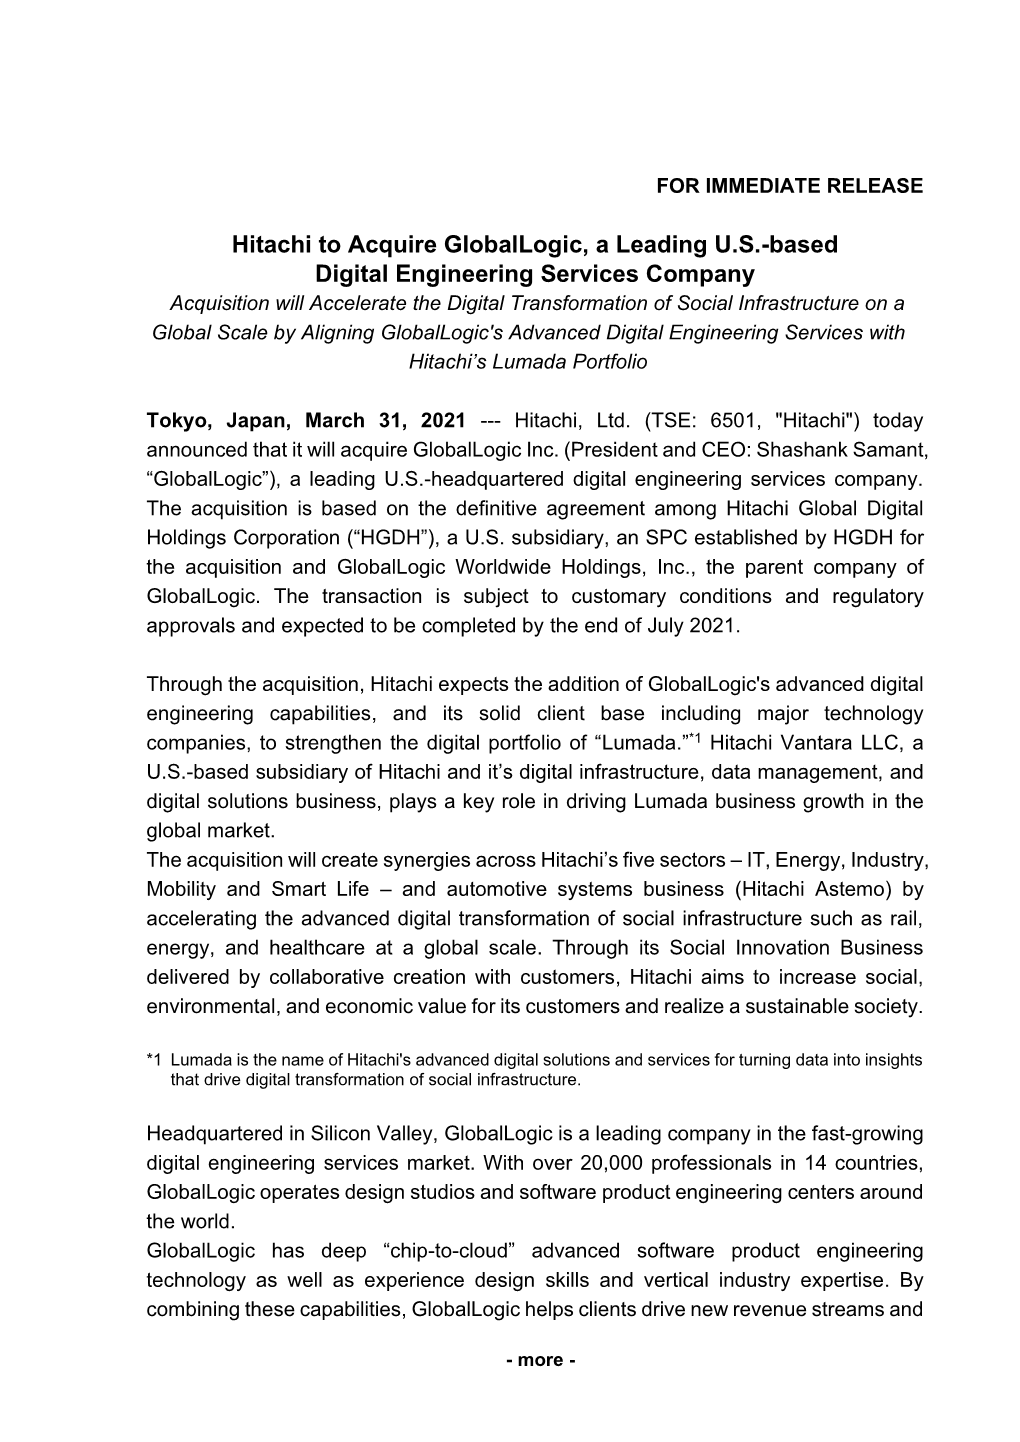 News Release: Hitachi to Acquire Globallogic, a Leading U.S.-Based